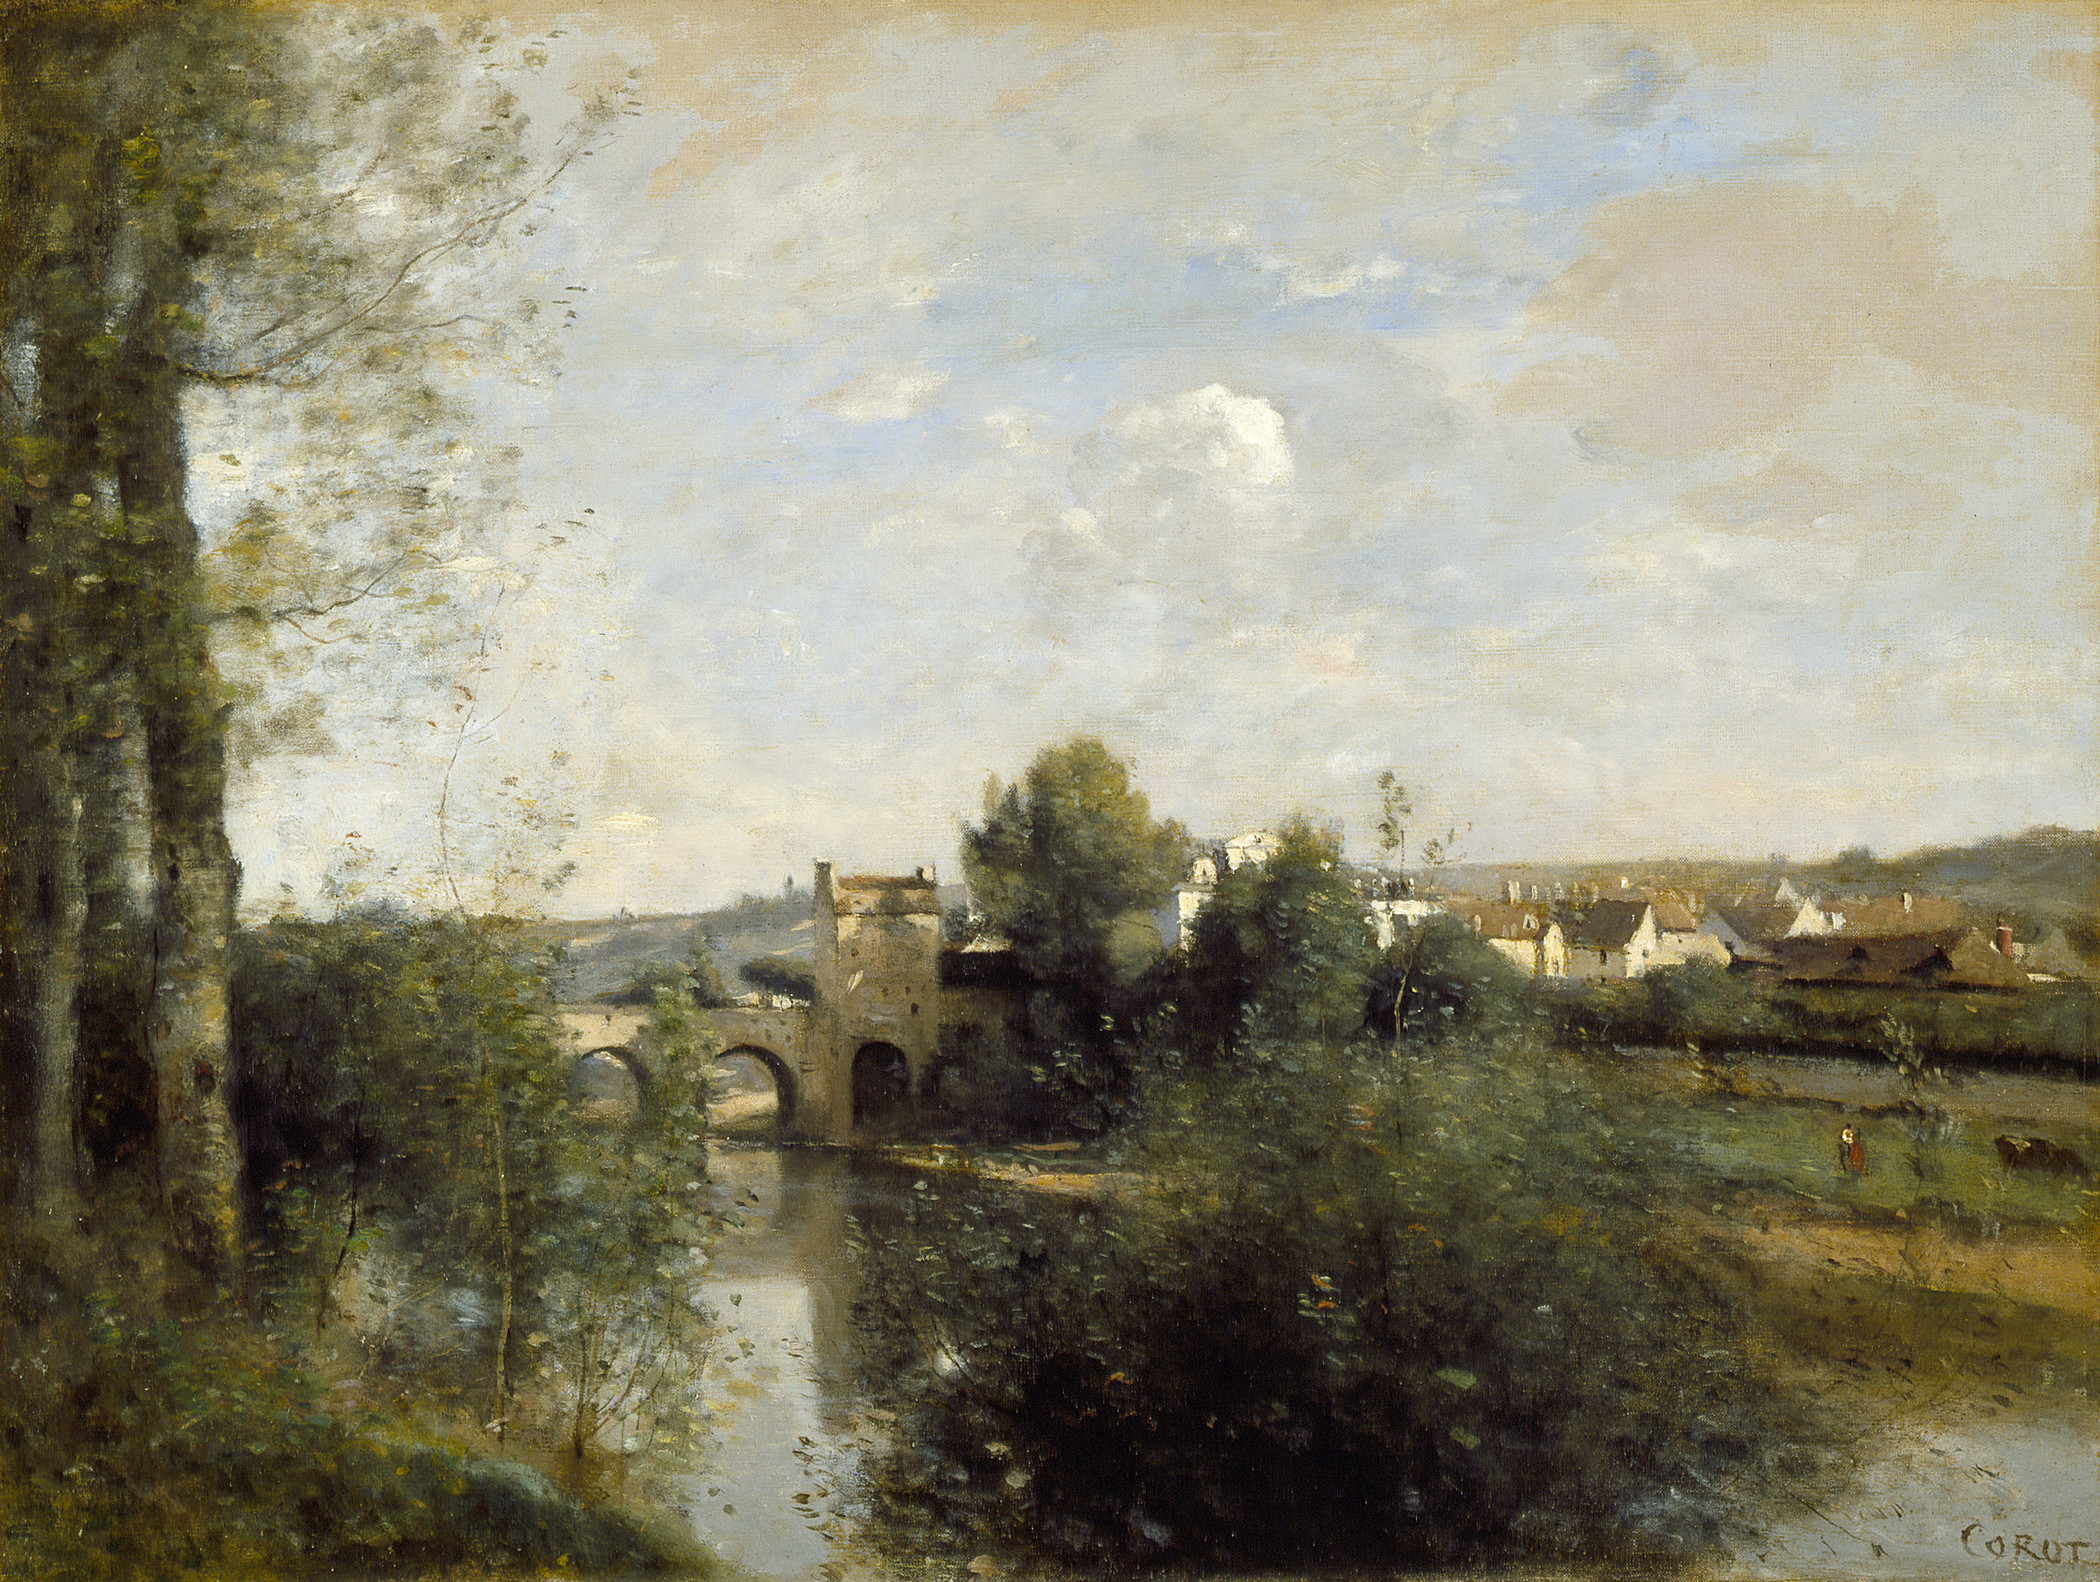 A vintage landscape featuring a river and old bridge